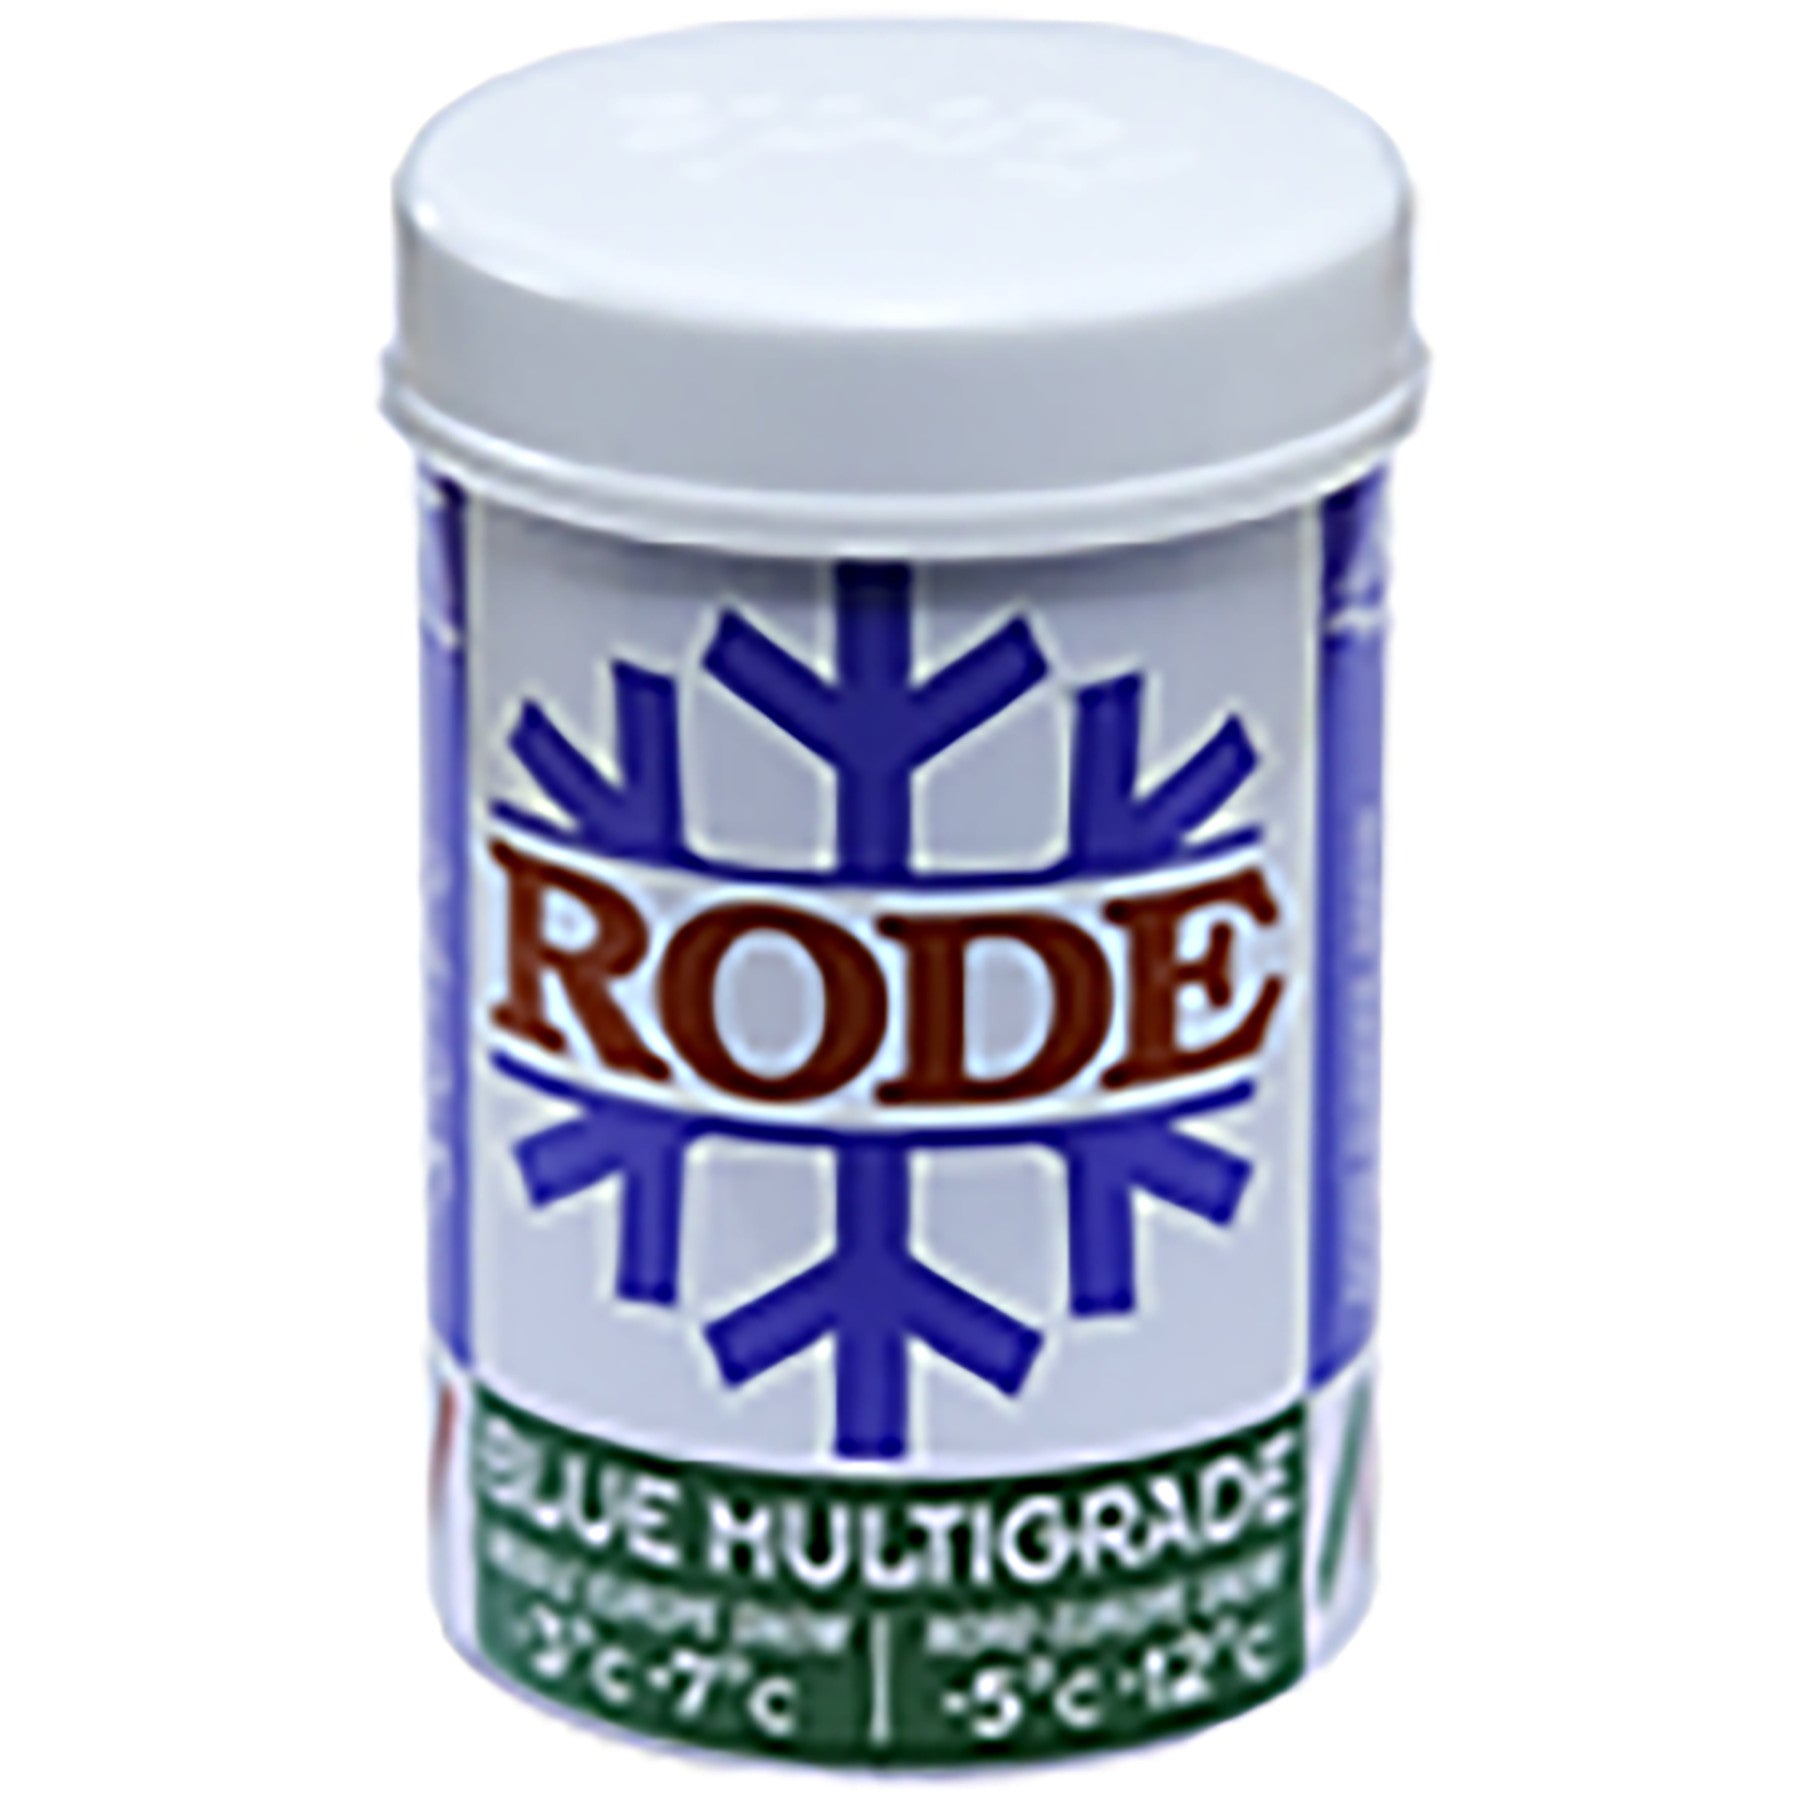 Buy blue-multigrade Rode Kick Basic